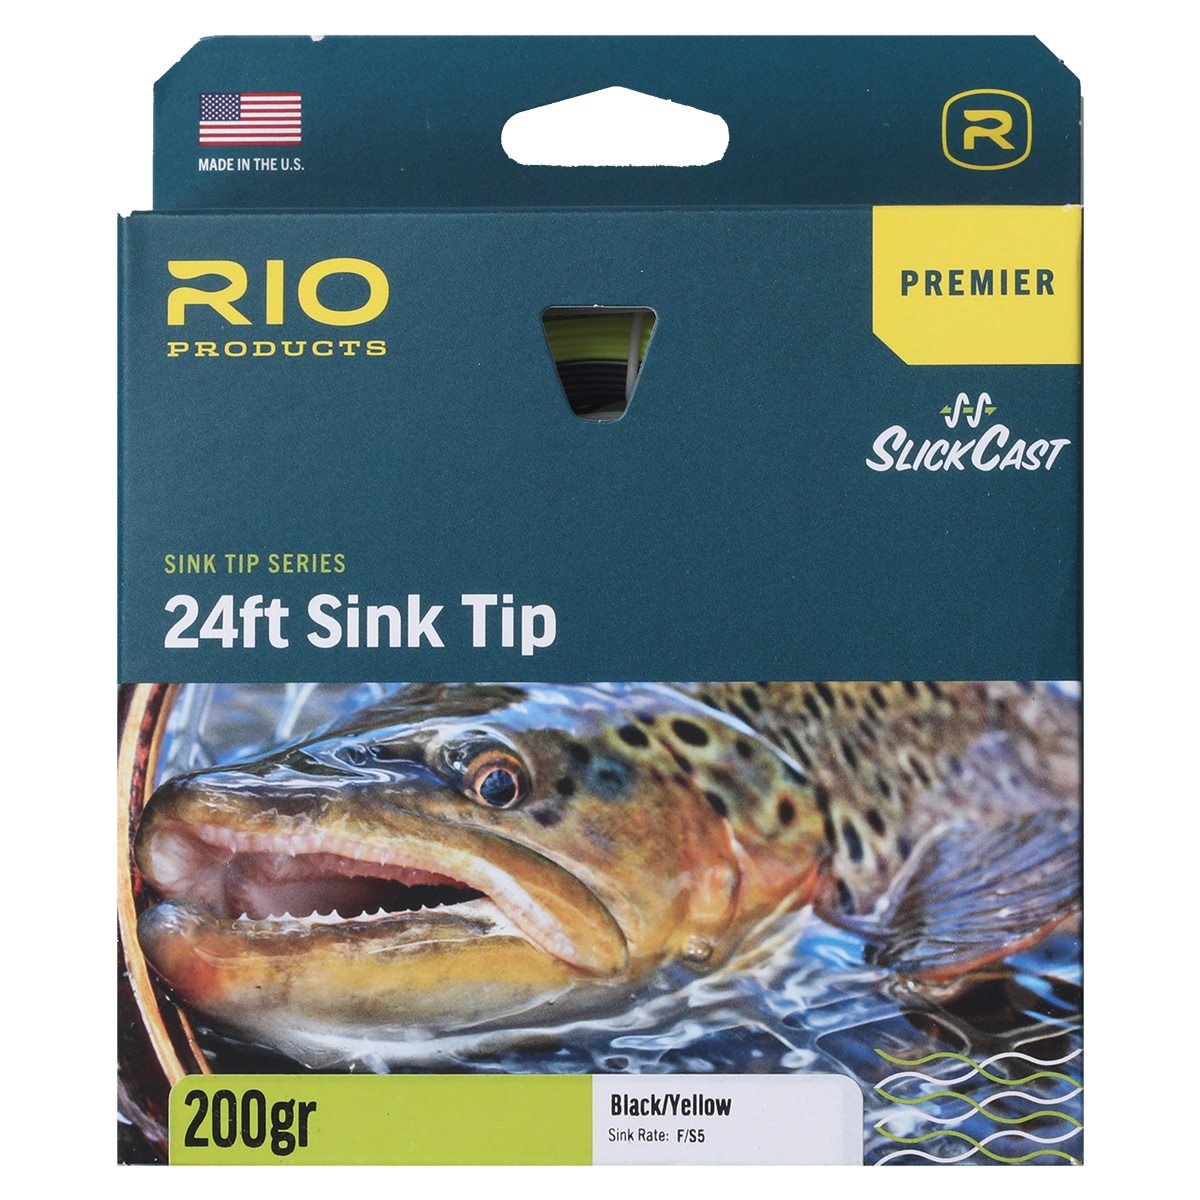 Rio Premier 24 ft. Sink Tip